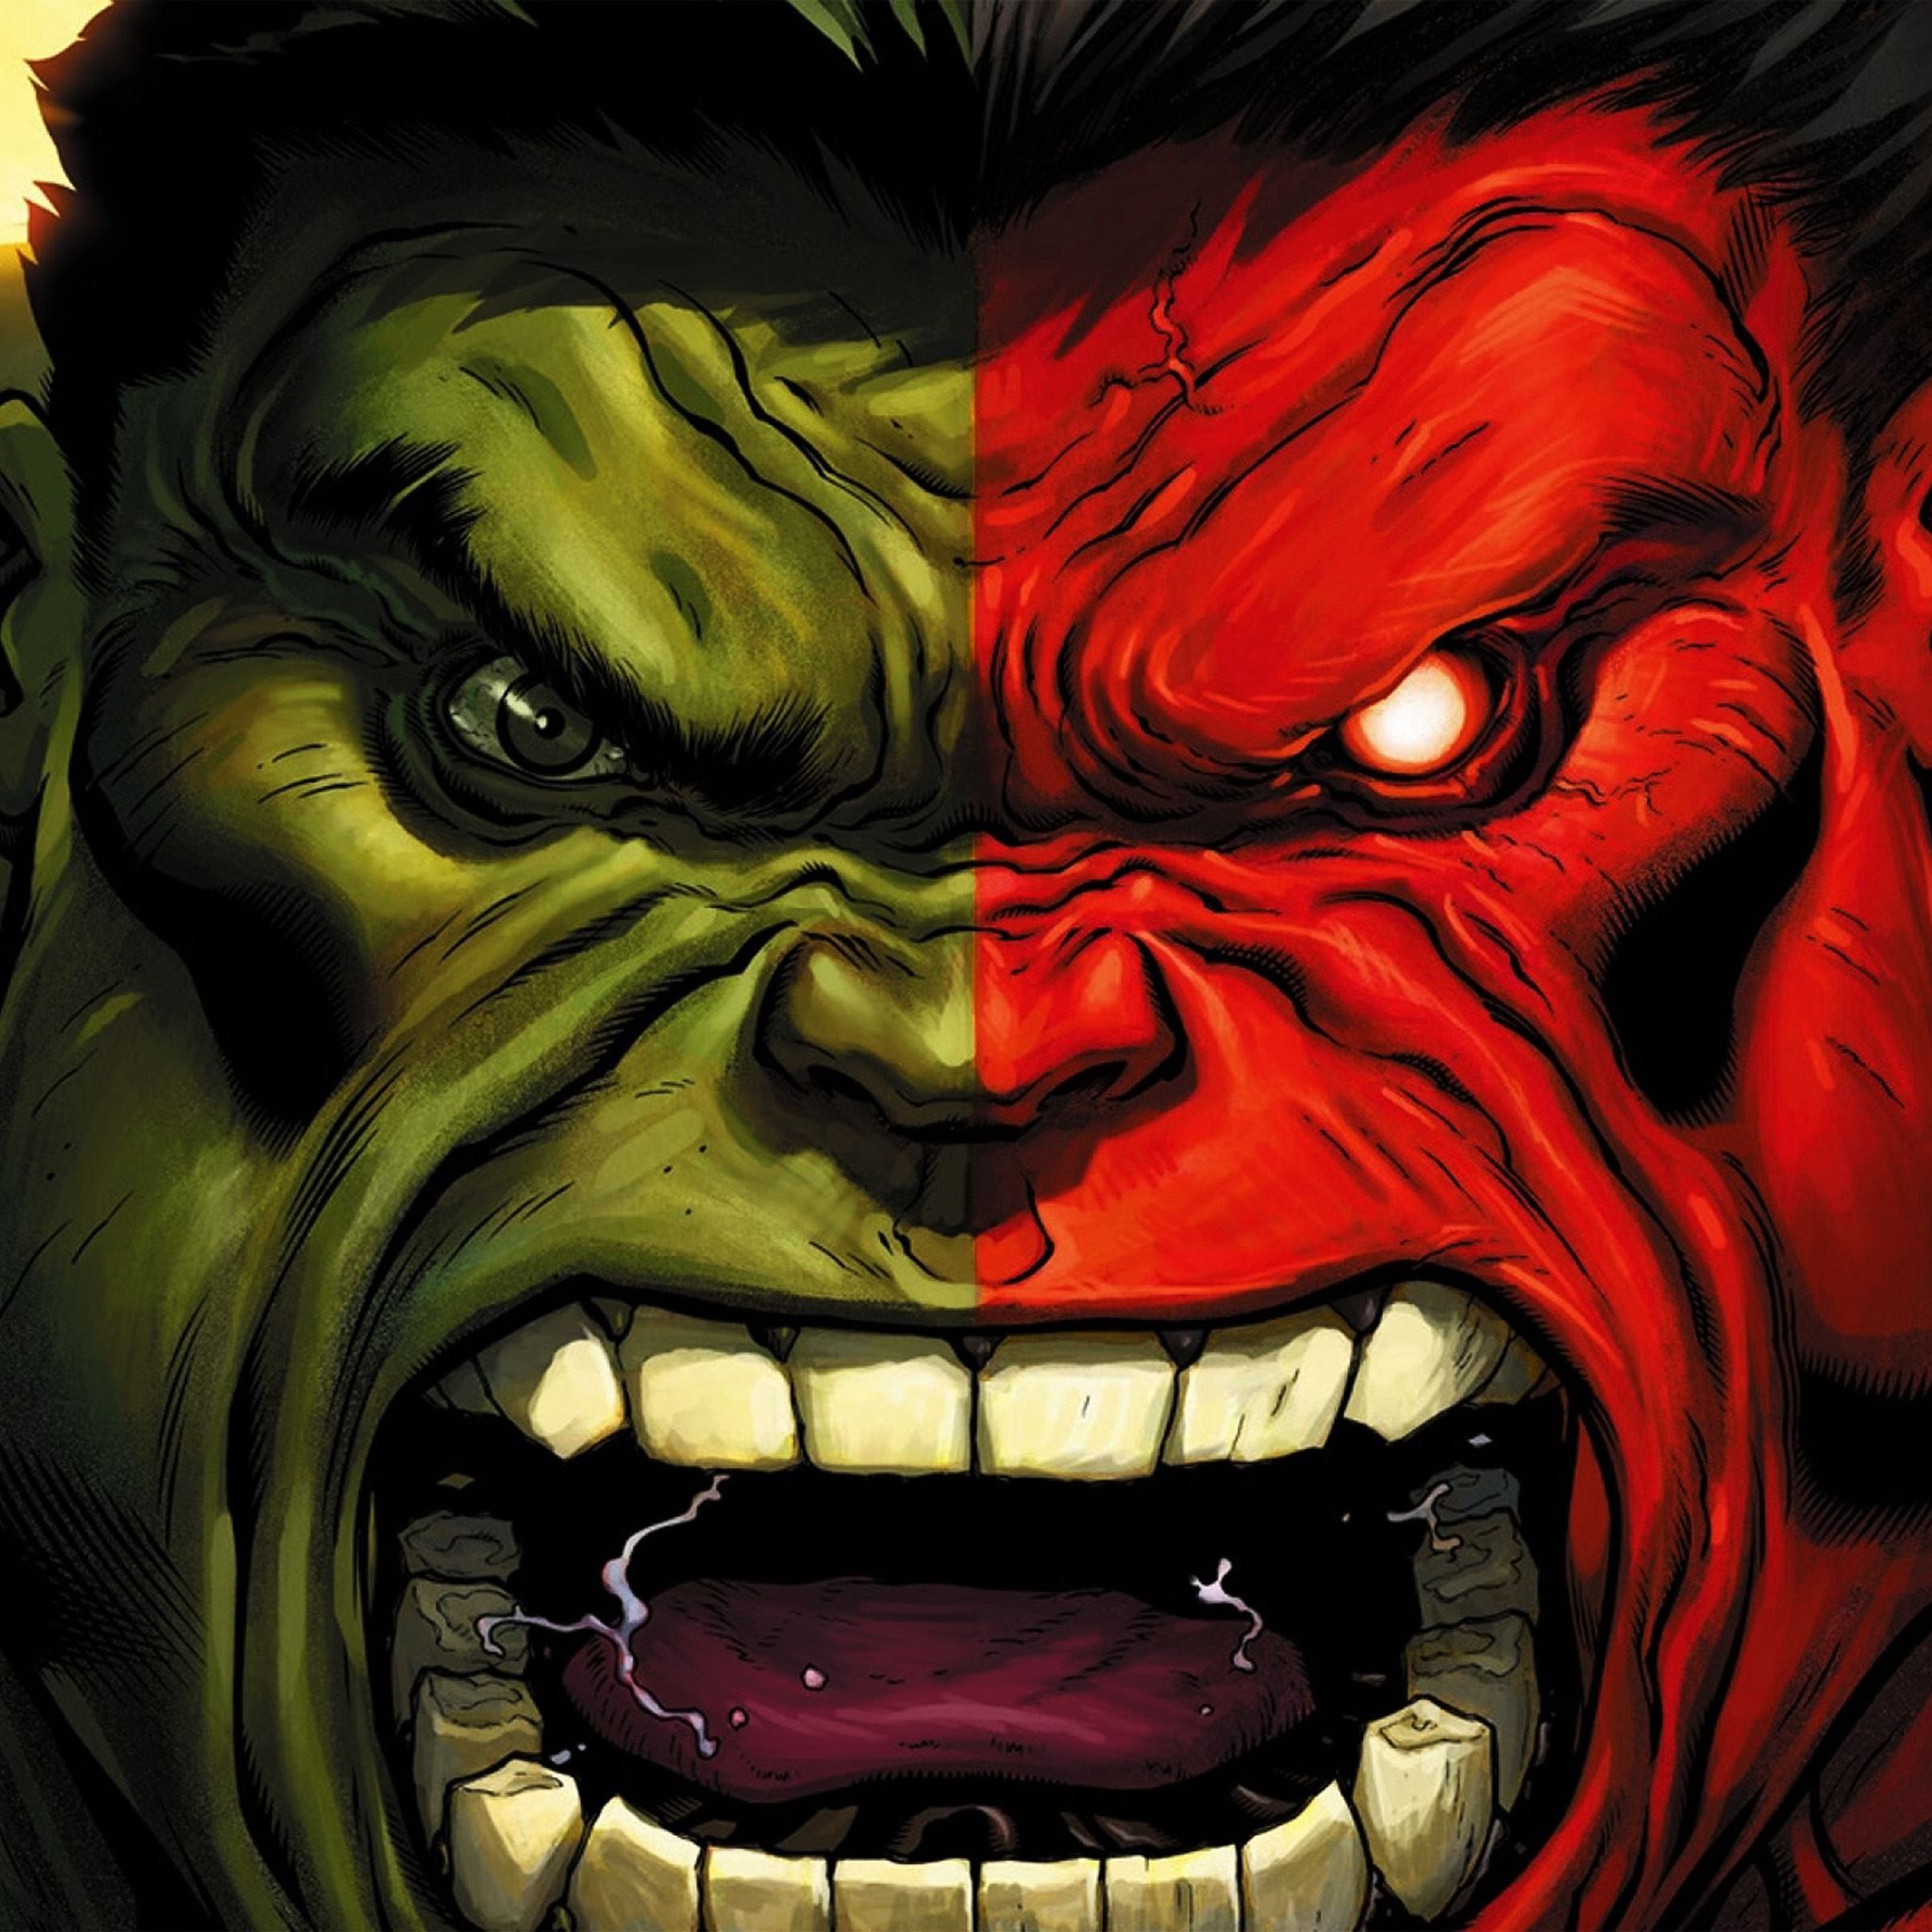 Hulk Red Anger Cartoon Illustration Art Dark iPad Air Wallpaper Free Download